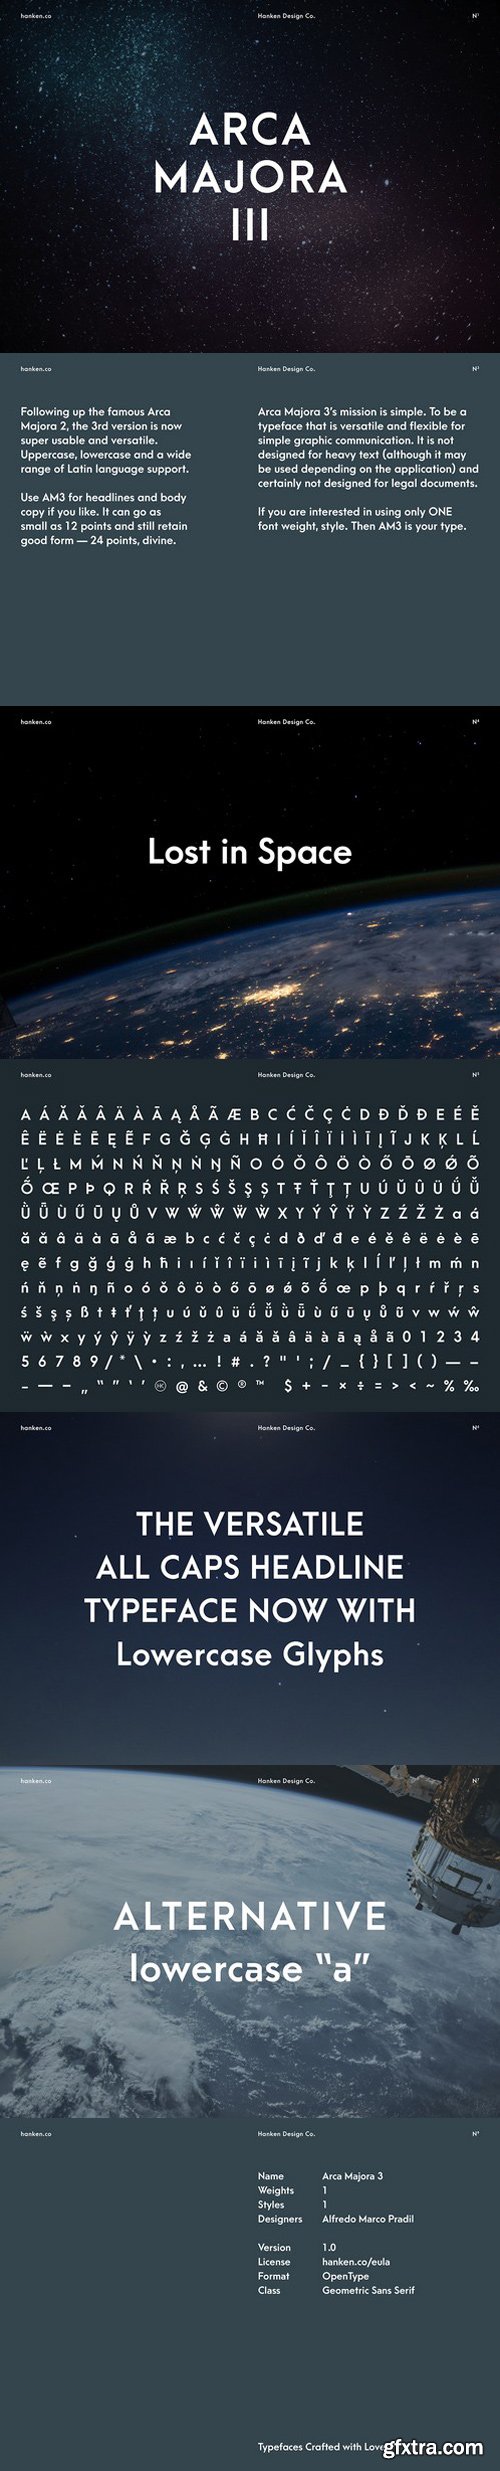 Arca Majora 3 Typeface